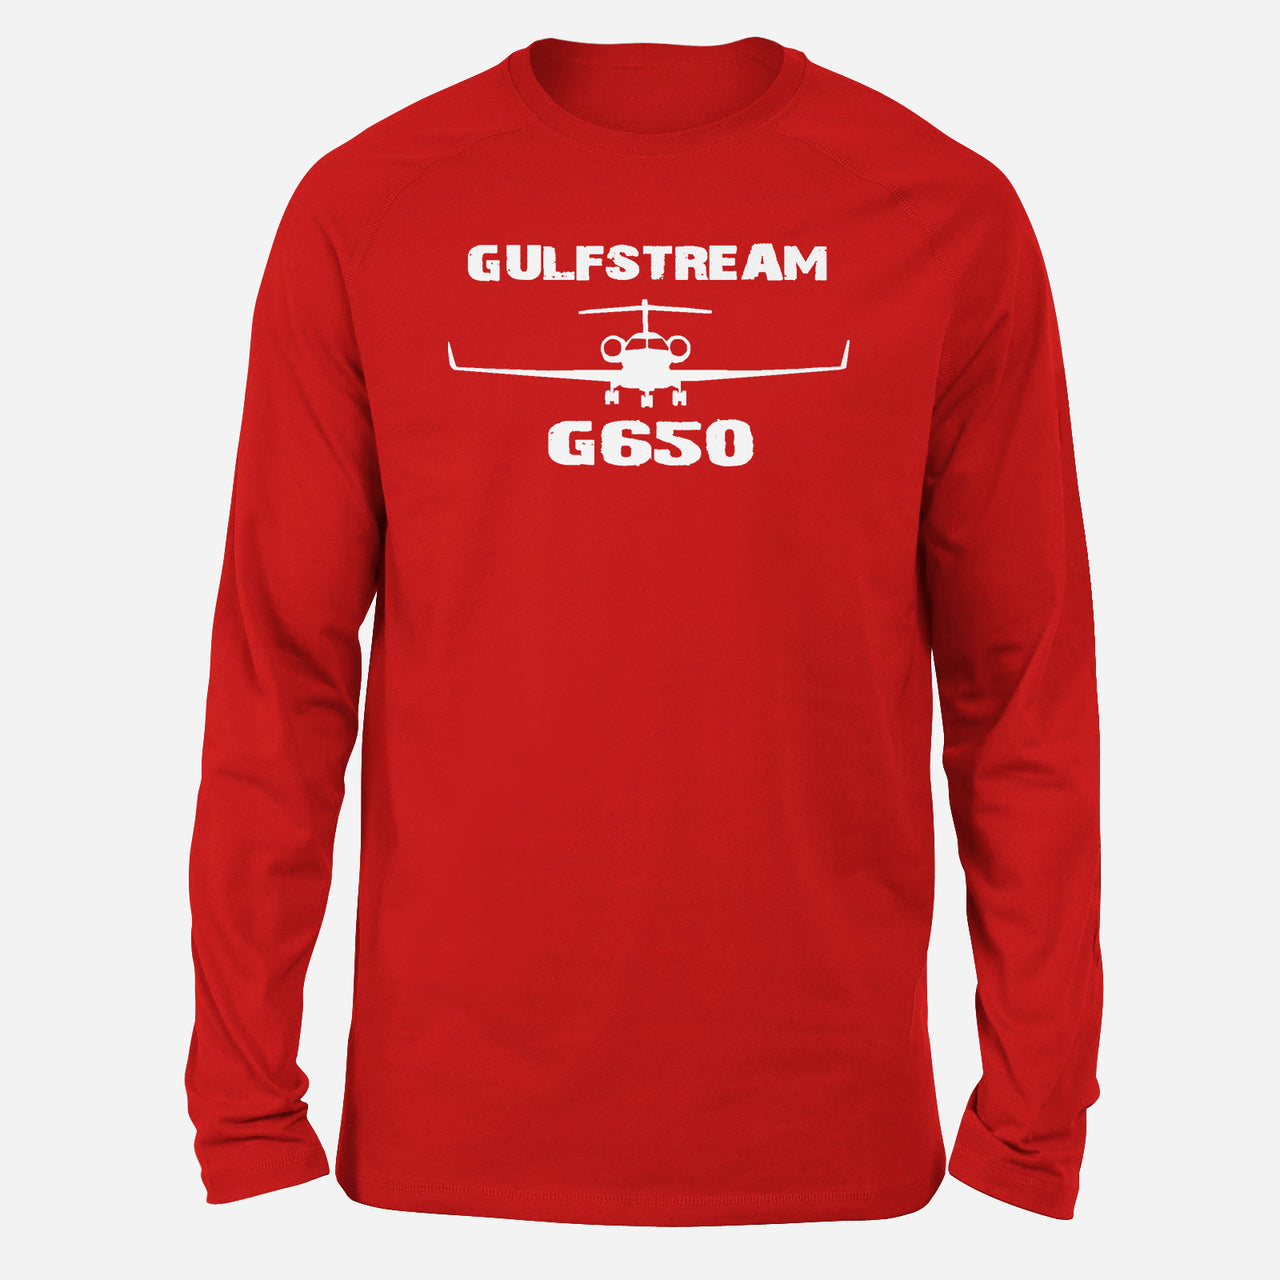 Gulfstream G650 & Plane Designed Long-Sleeve T-Shirts